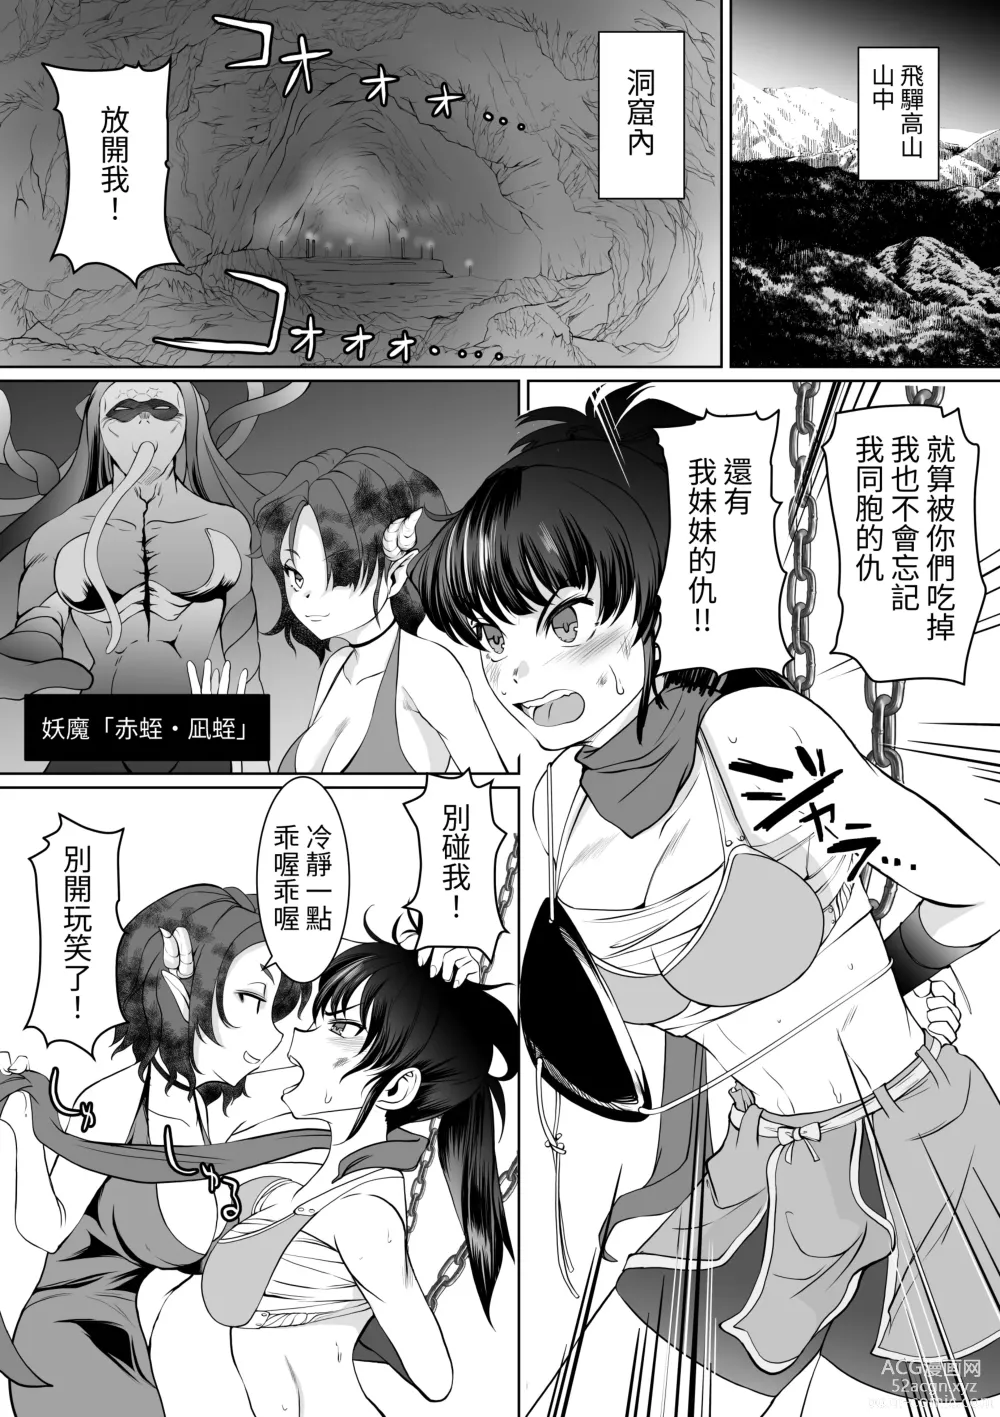 Page 2 of doujinshi 淫術催眠・女忍之觸手狂亂深淵